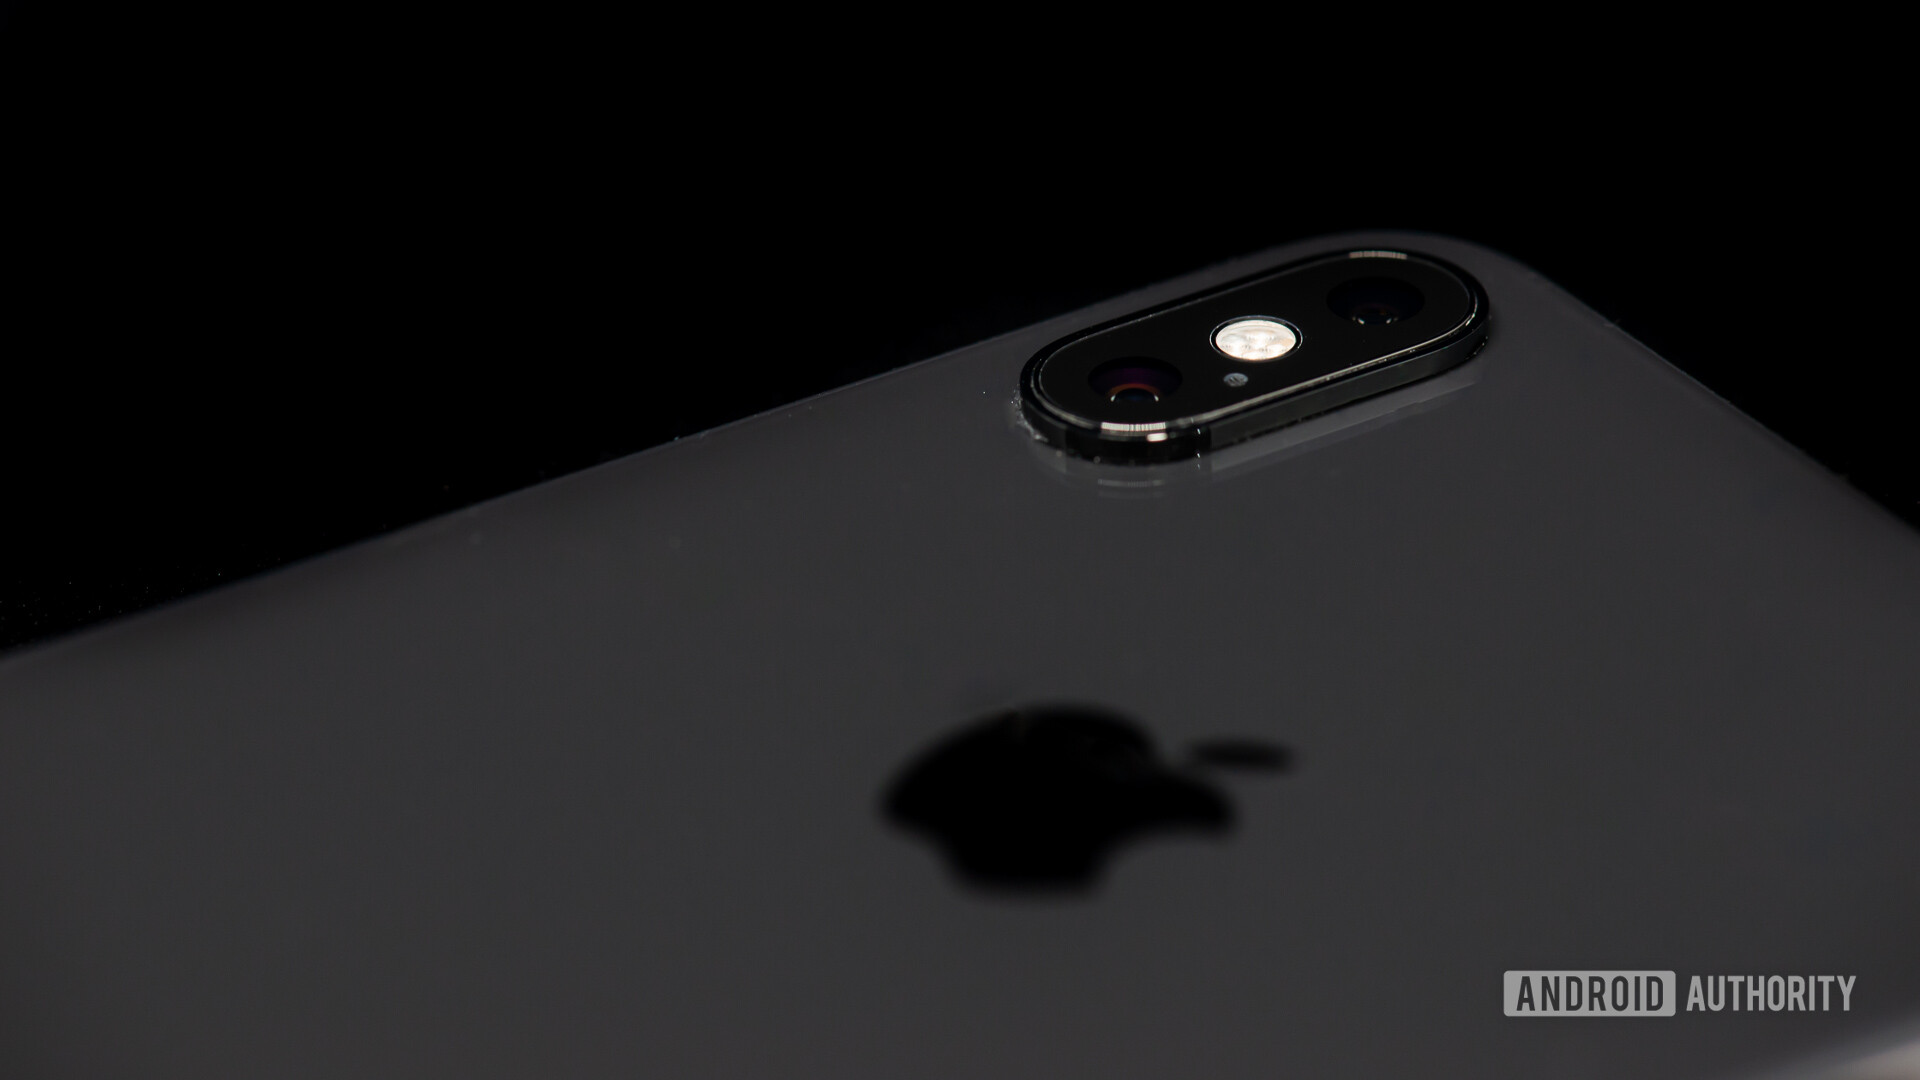 iPhone XS Max closeup on camera module and Apple logo